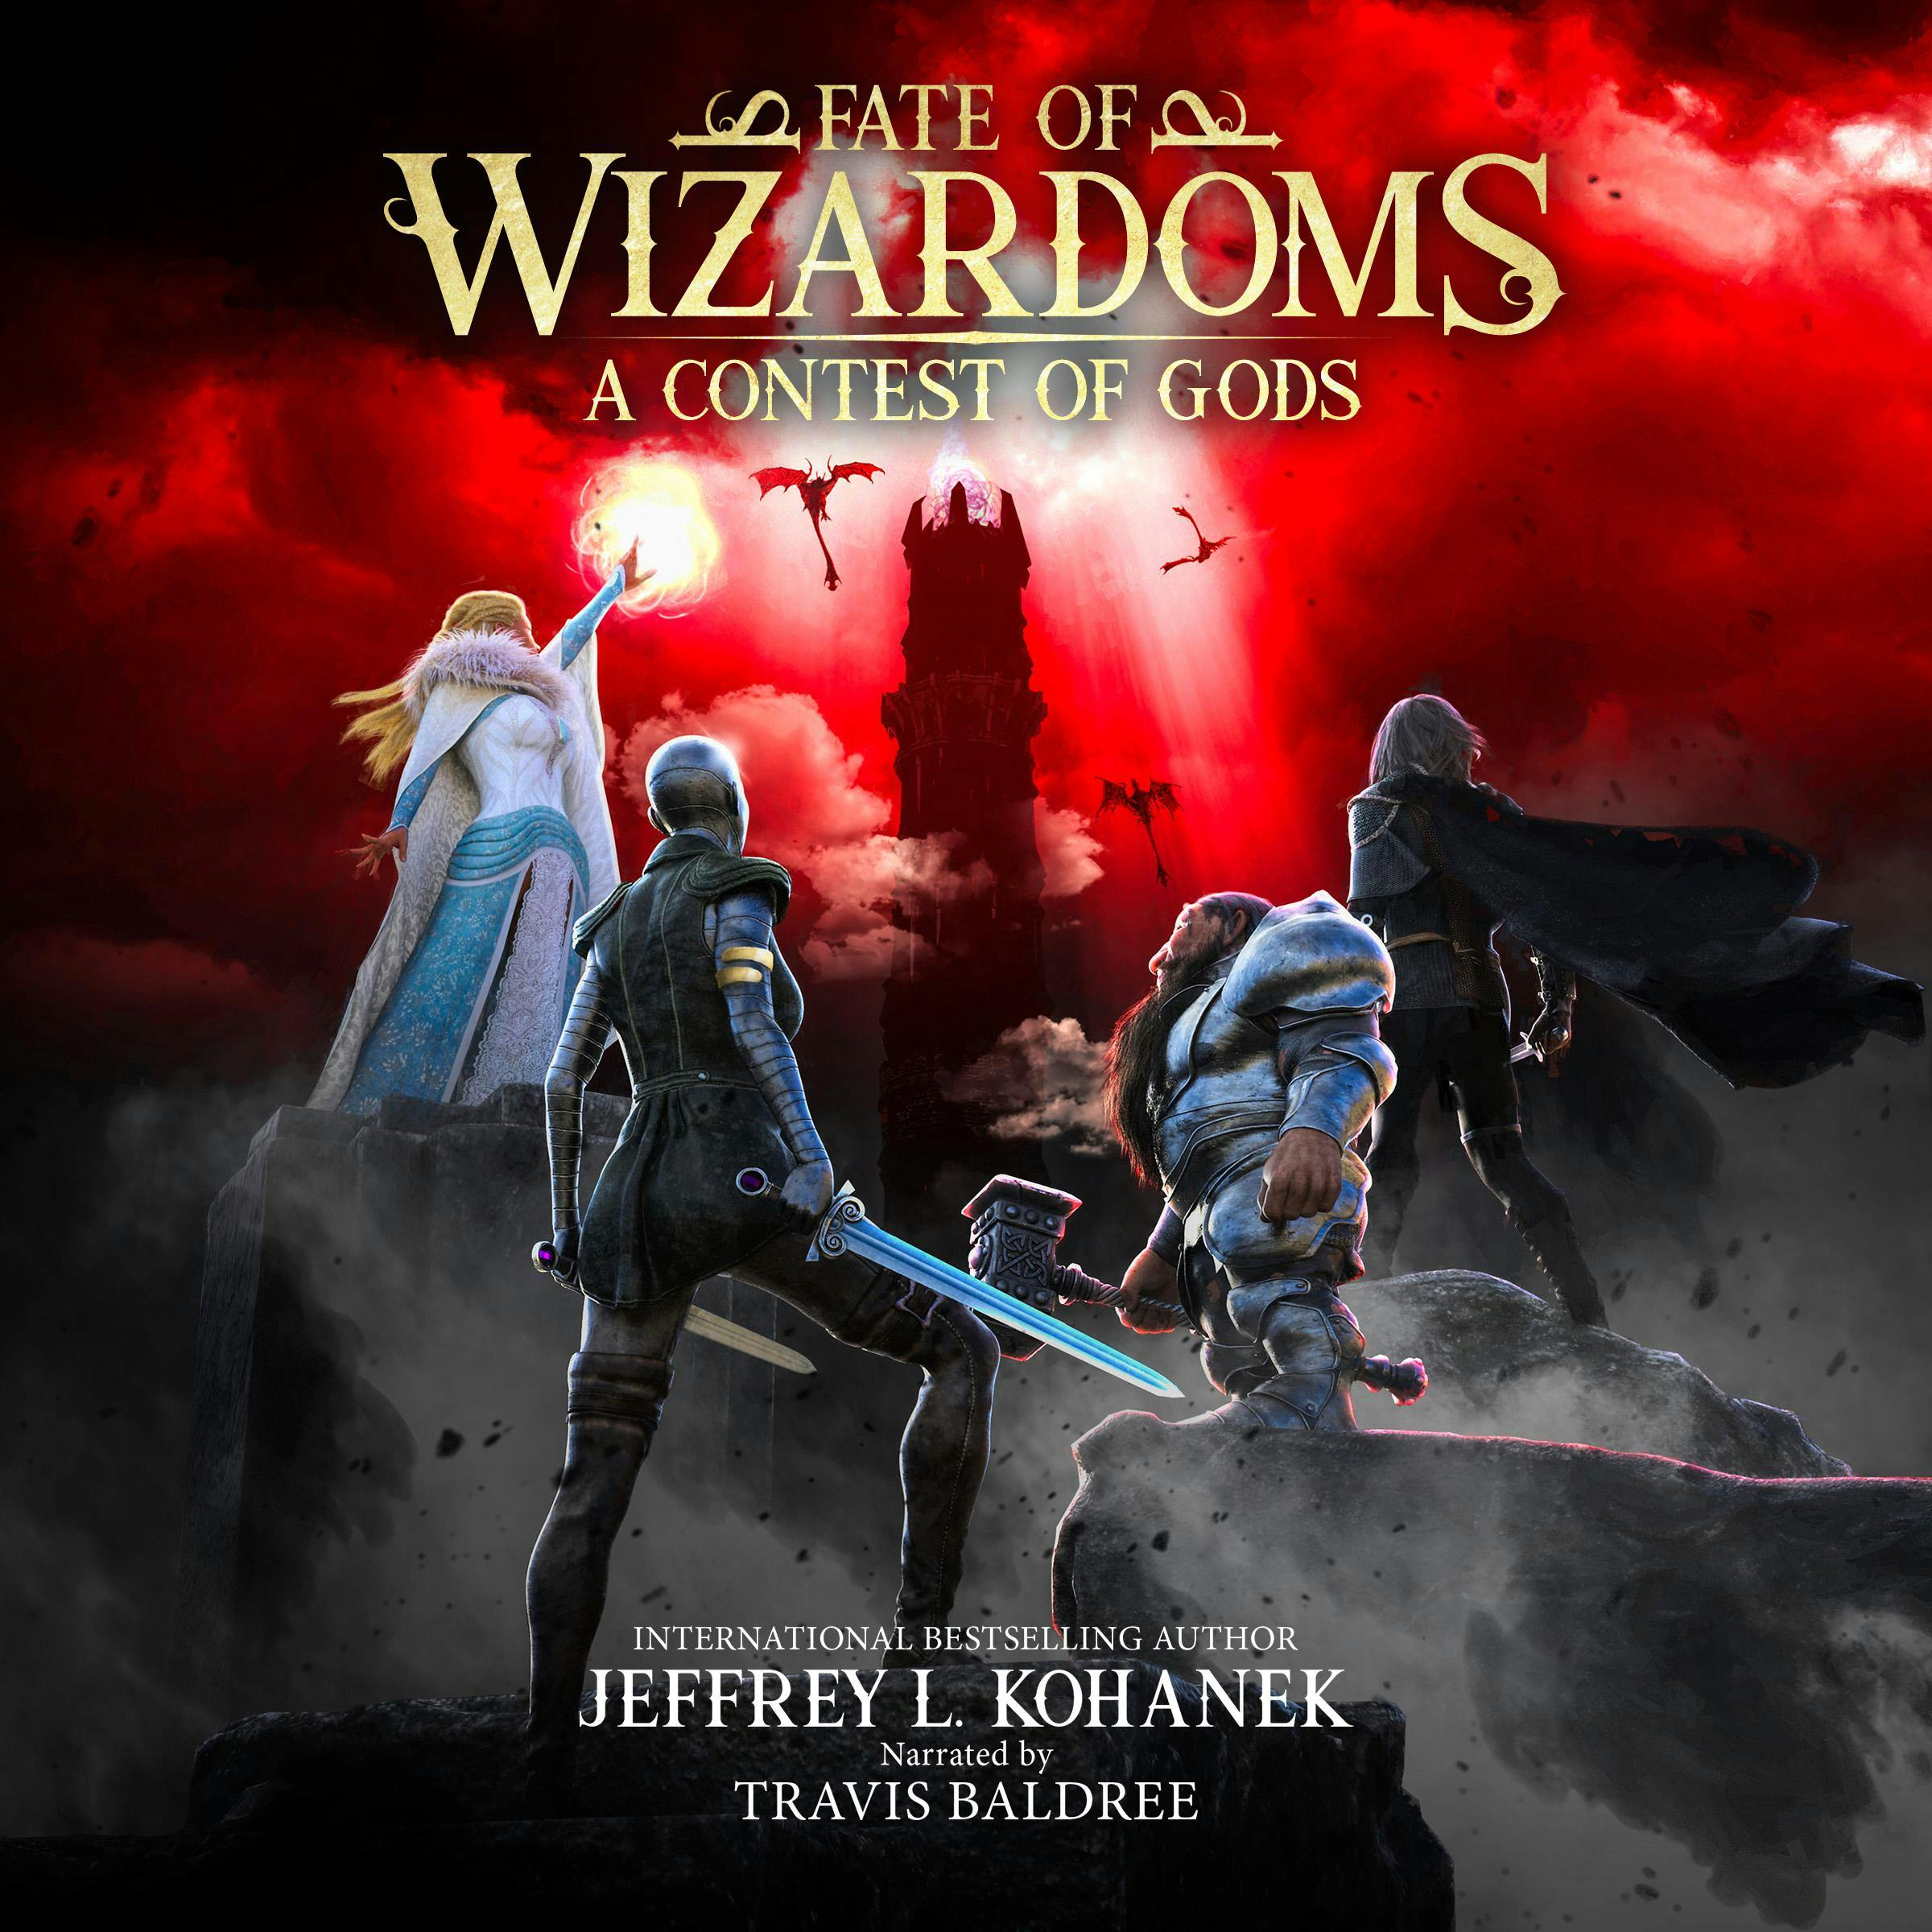 Wizardoms: A Contest of Gods - Jeffrey L. Kohanek